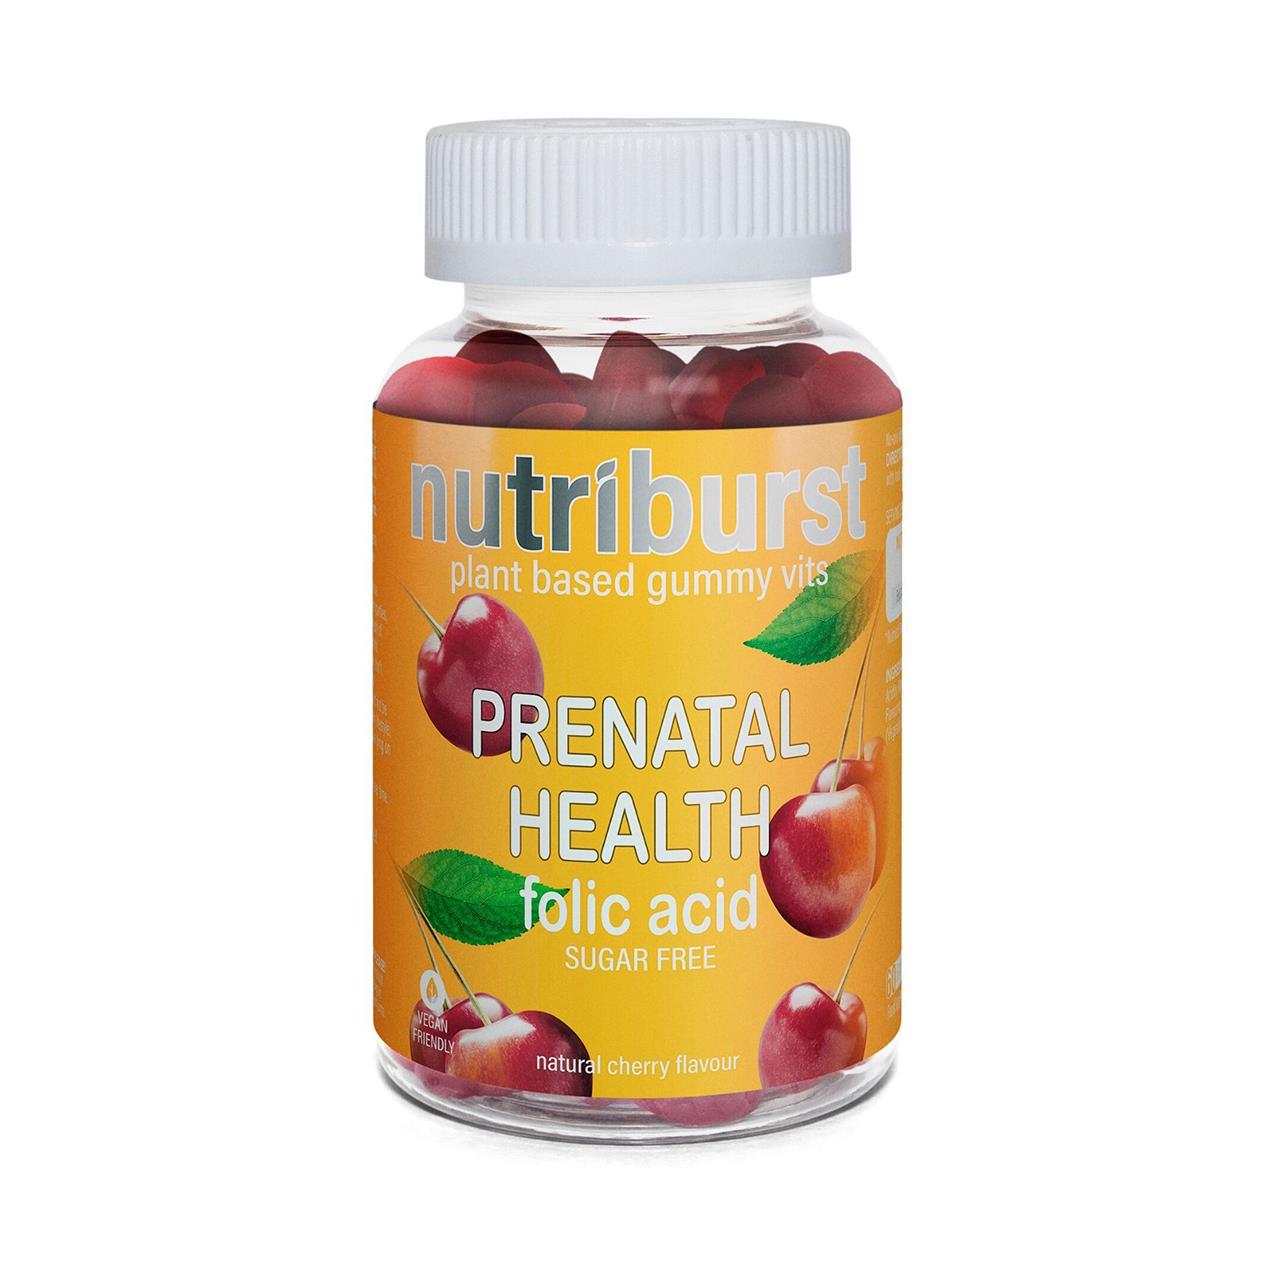 Image of 90% OFF! Nutriburst - Vitamin Gummies: Prenatal Health with Folic Acid 'v ww il Dant based gummyvits PRENATAL AT folic acid SUGAR FREE 1 N R - 